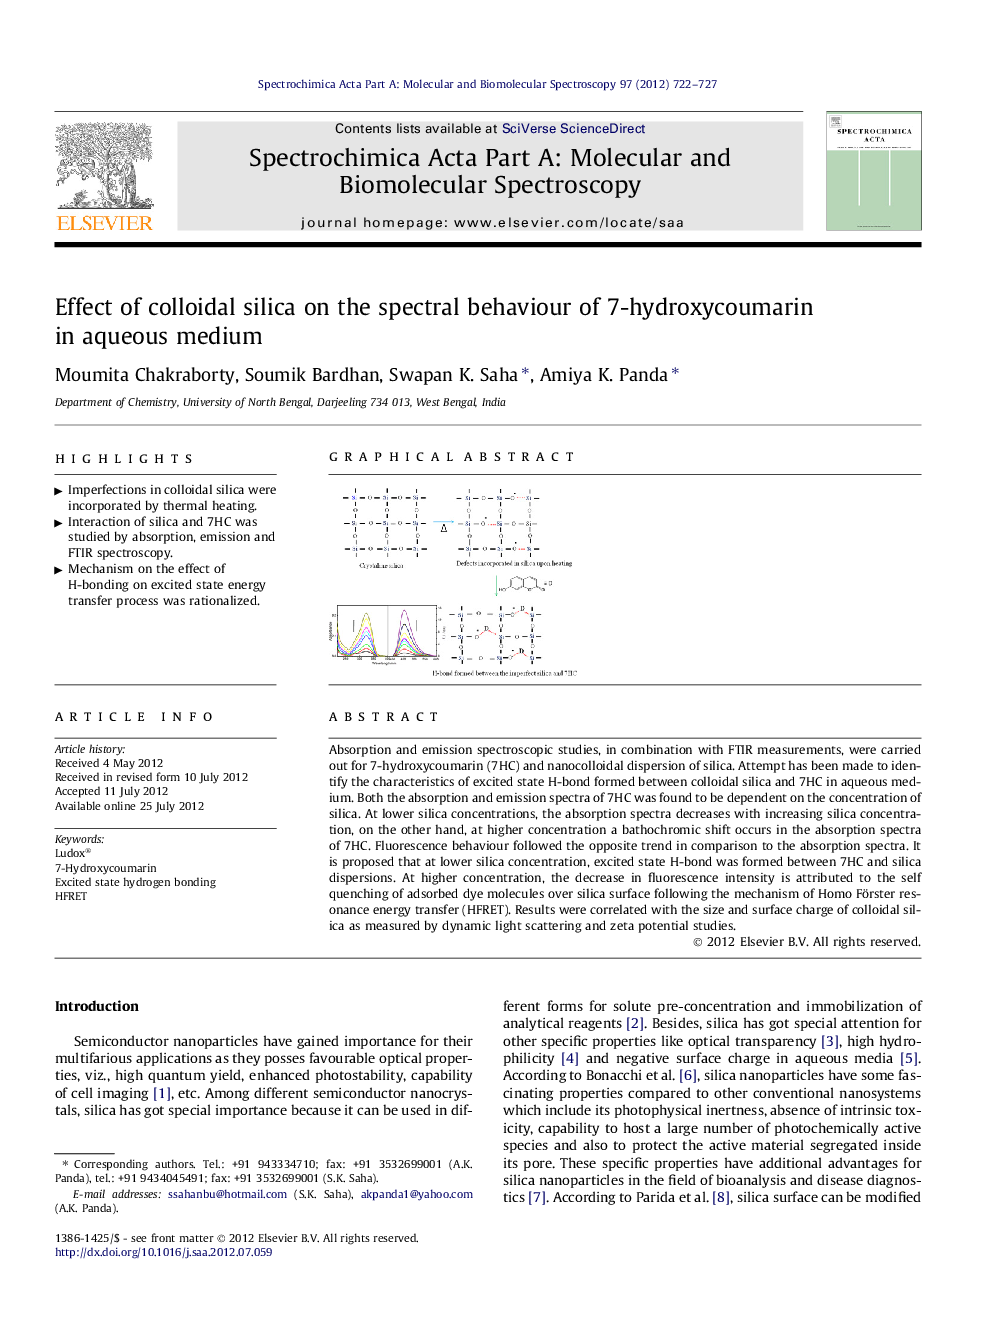 Effect of colloidal silica on the spectral behaviour of 7-hydroxycoumarin in aqueous medium